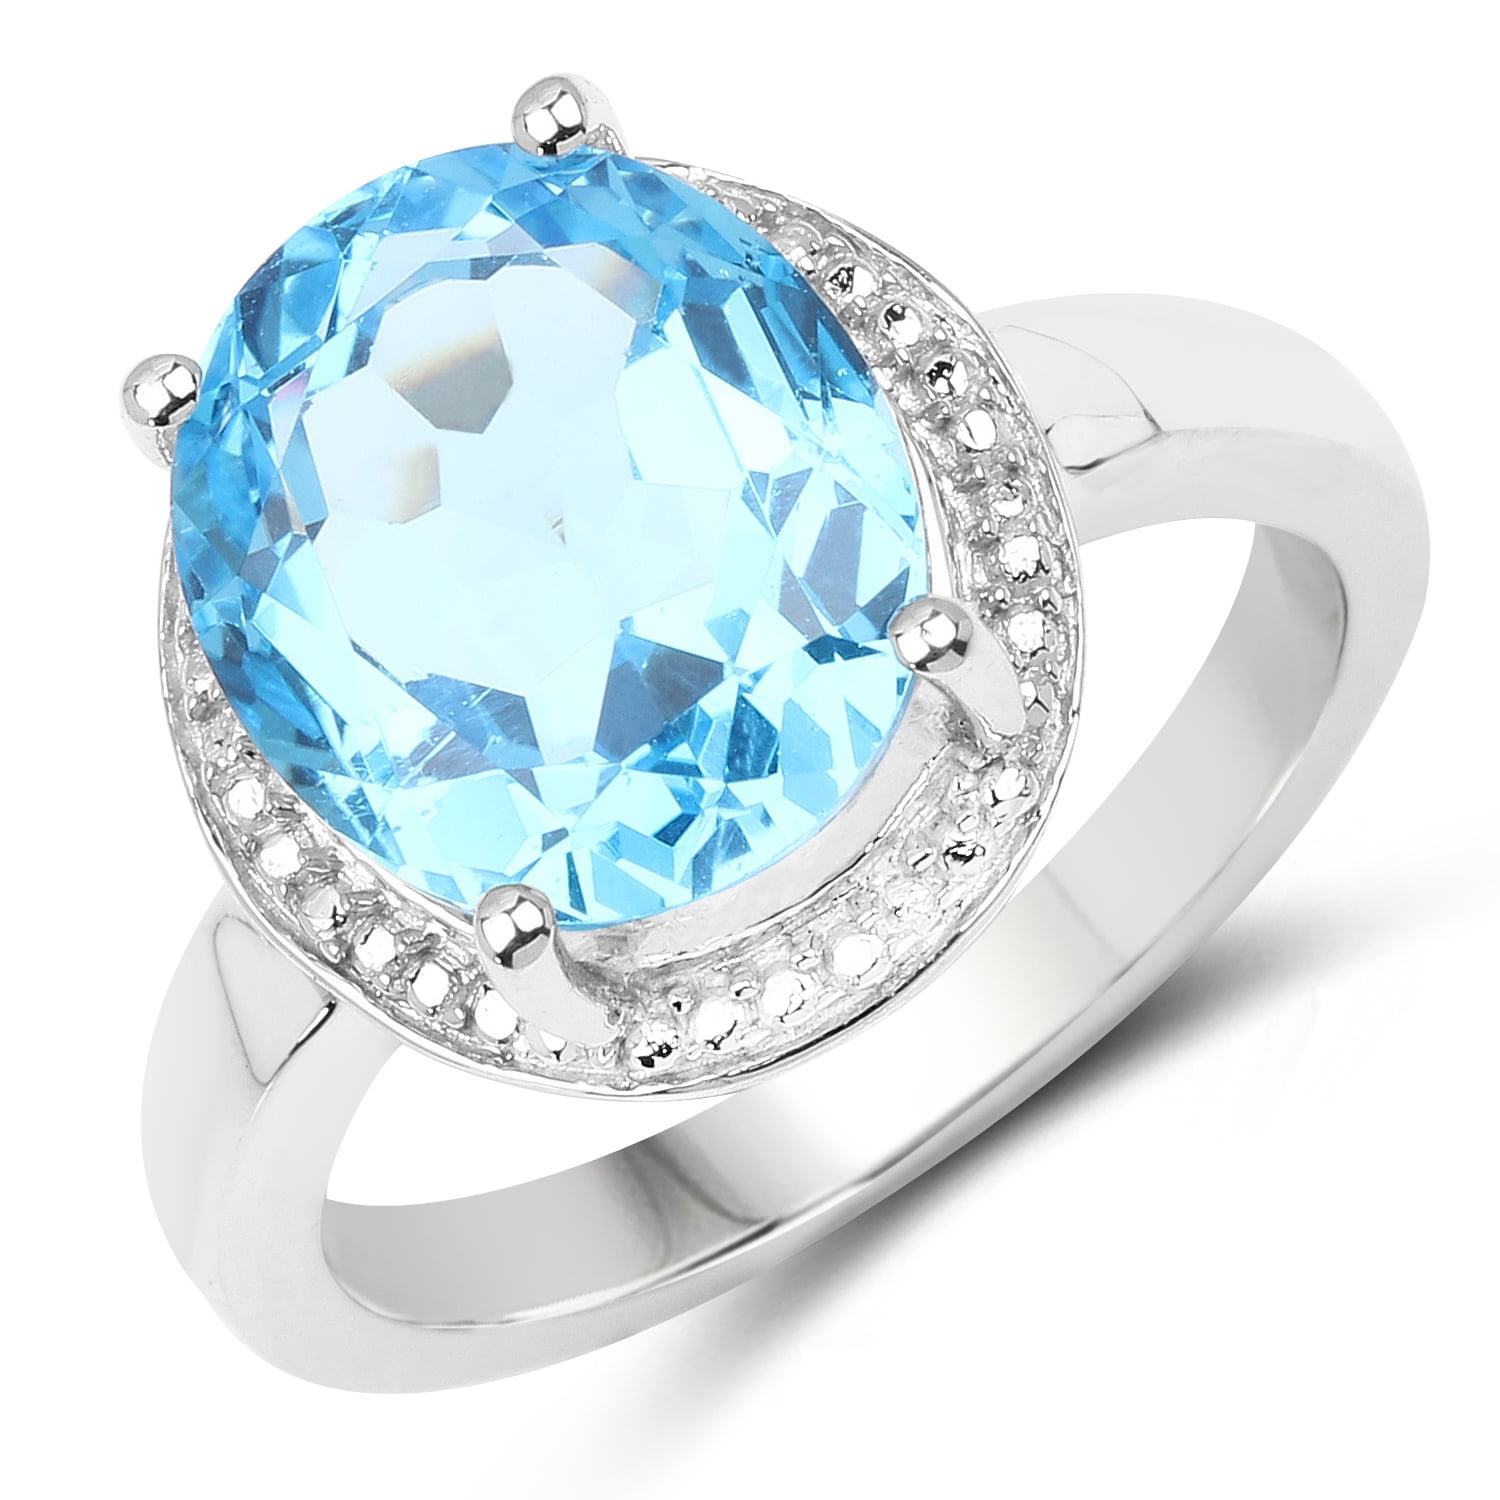 Size 7.00 Bonyak Jewelry Genuine Round Blue Topaz Ring in Sterling Silver